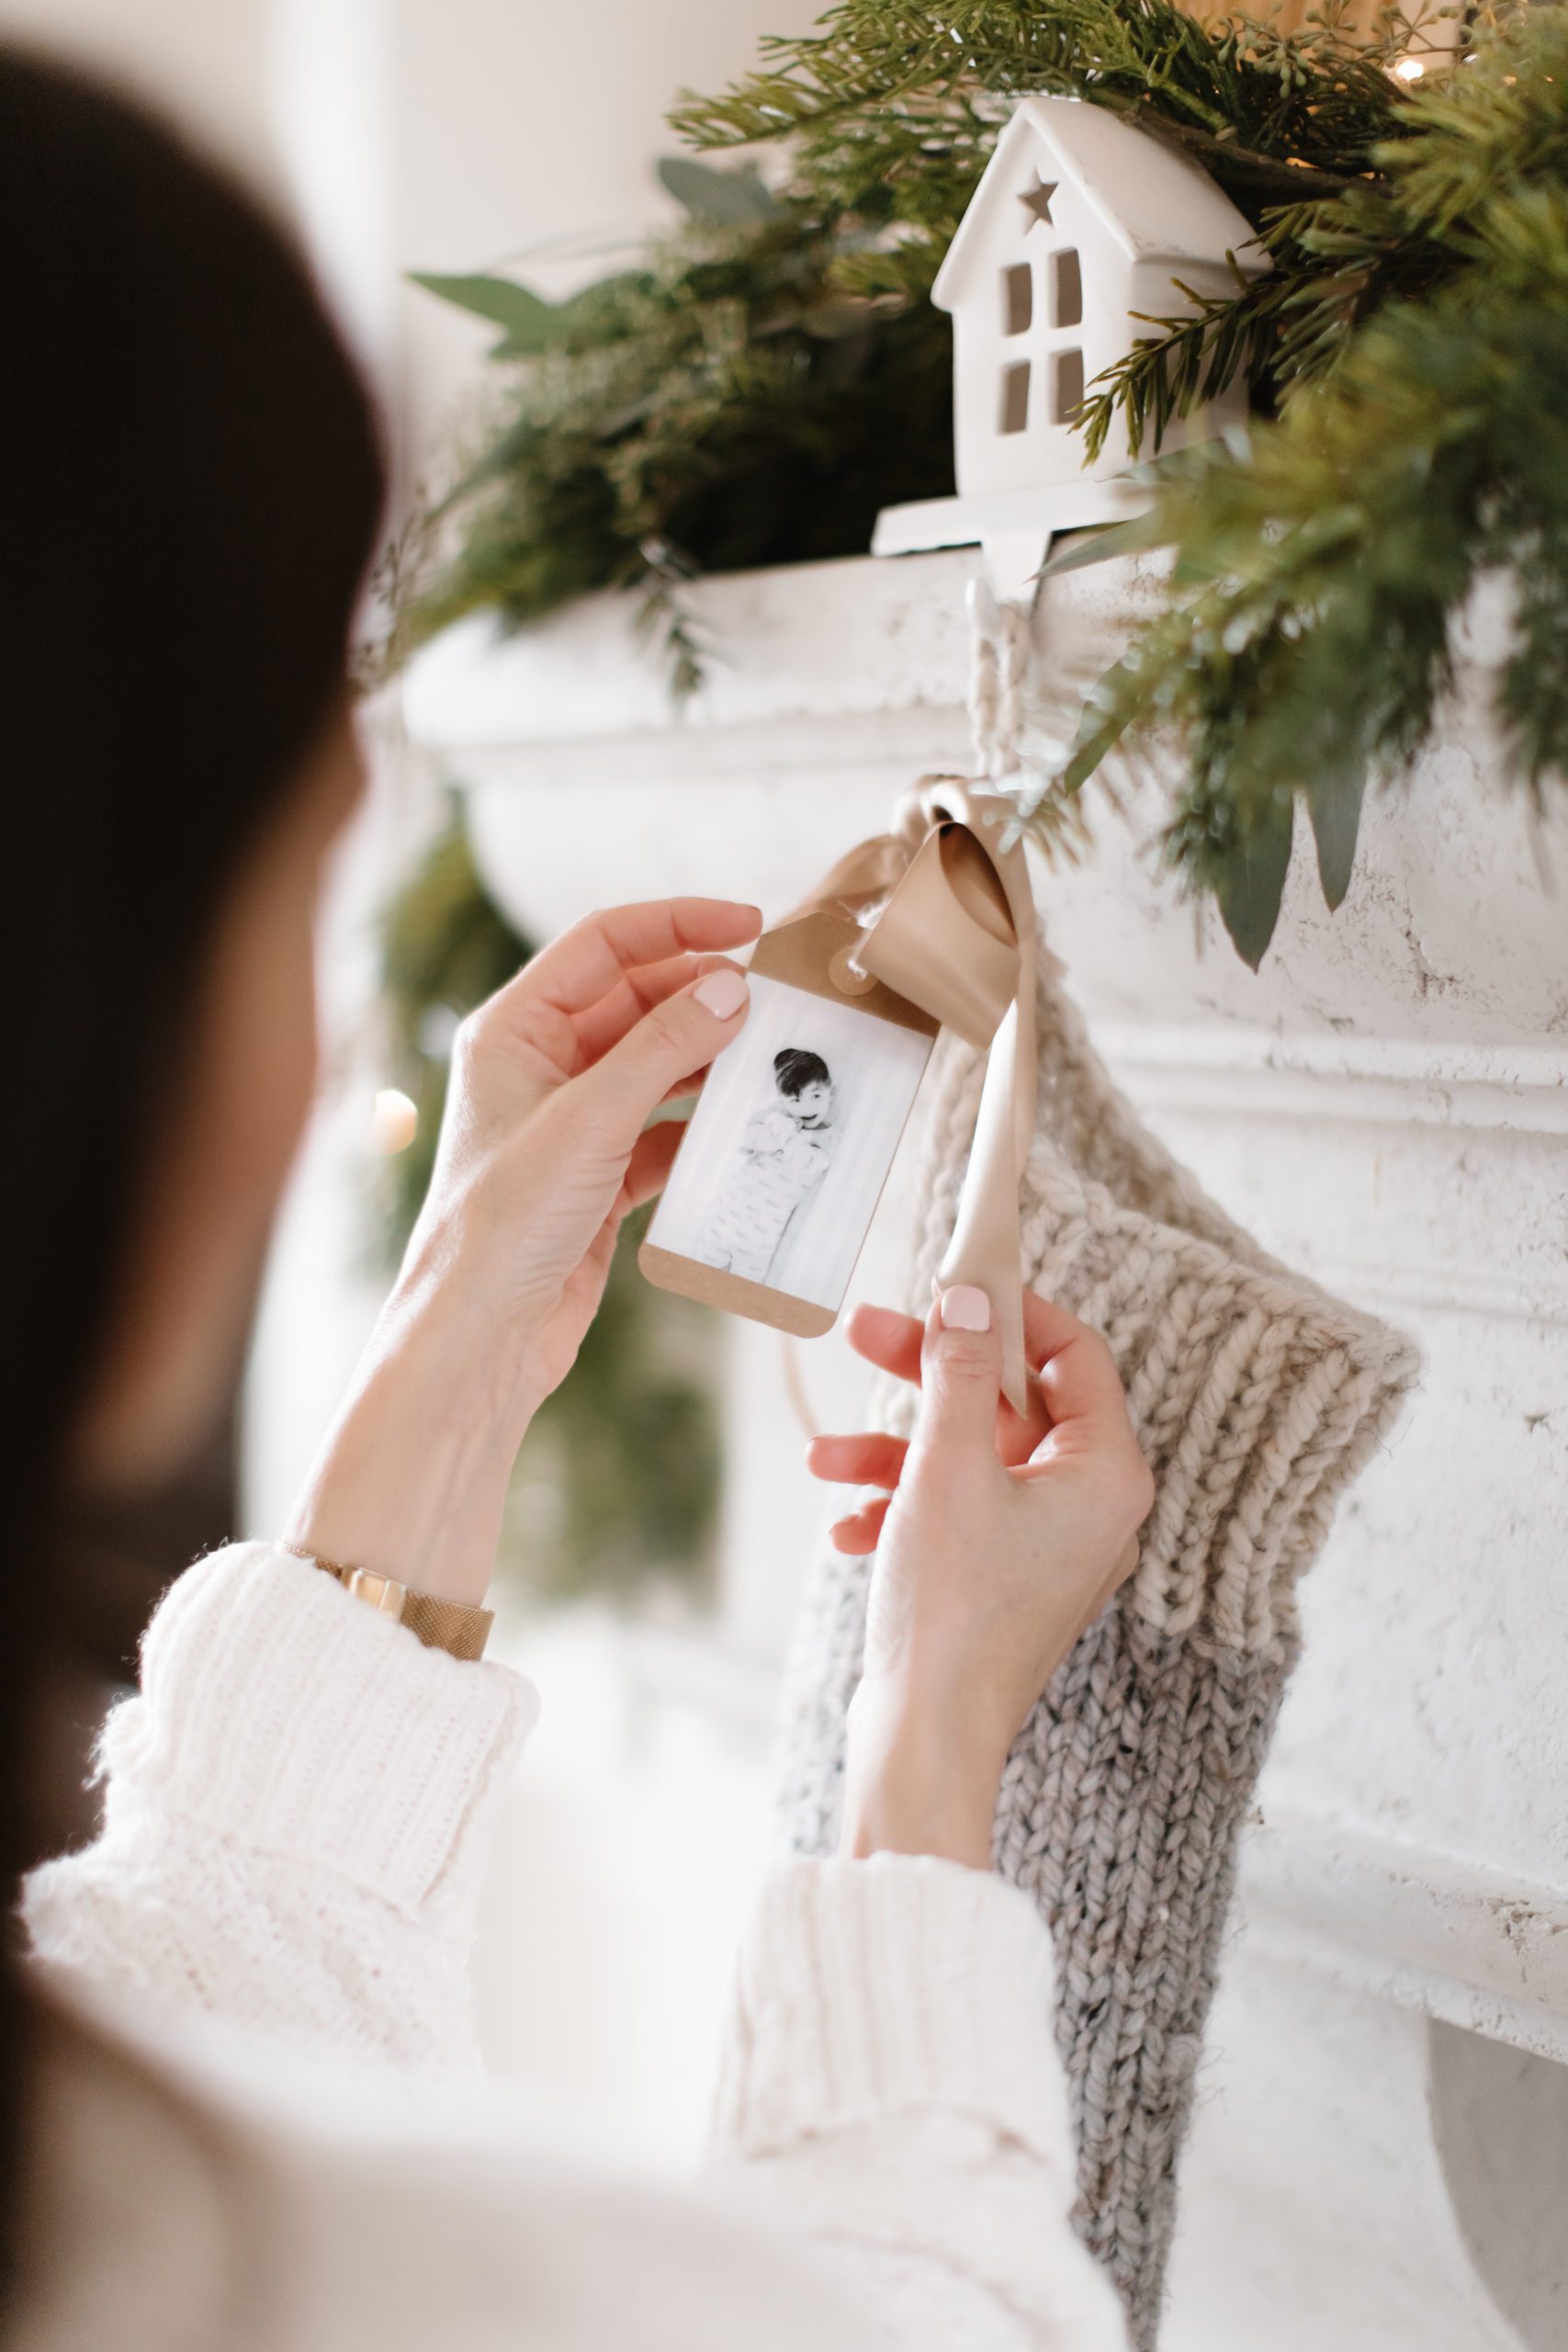 DIY stocking tags with photos